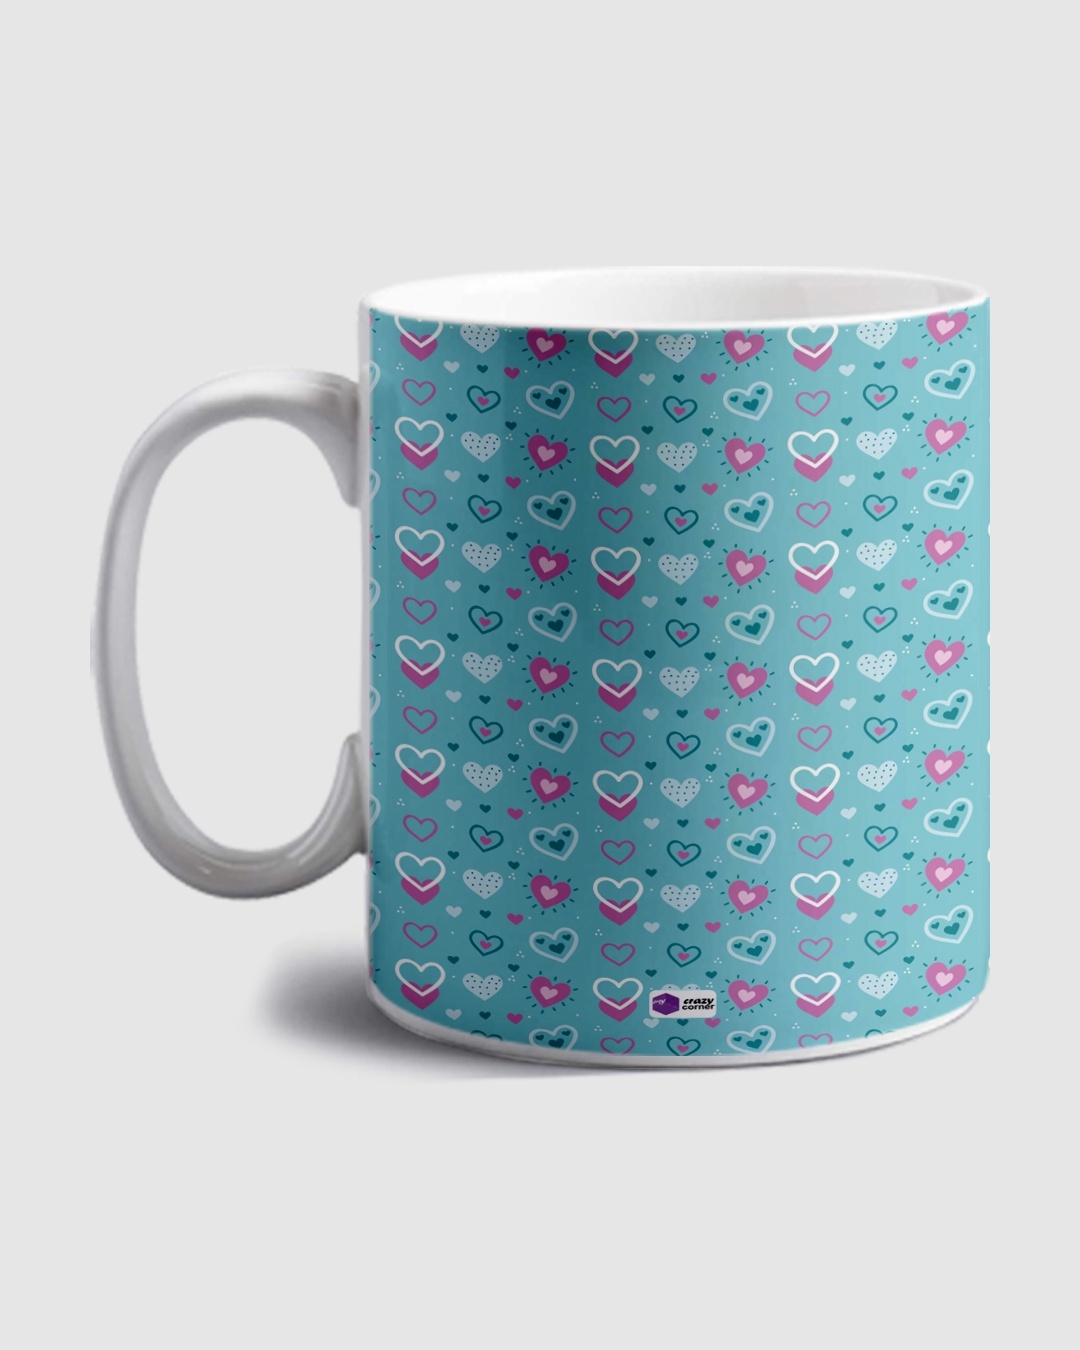 Shop Romantic Heart Printed Ceramic Mug (350ml, Blue, Single piece)-Front